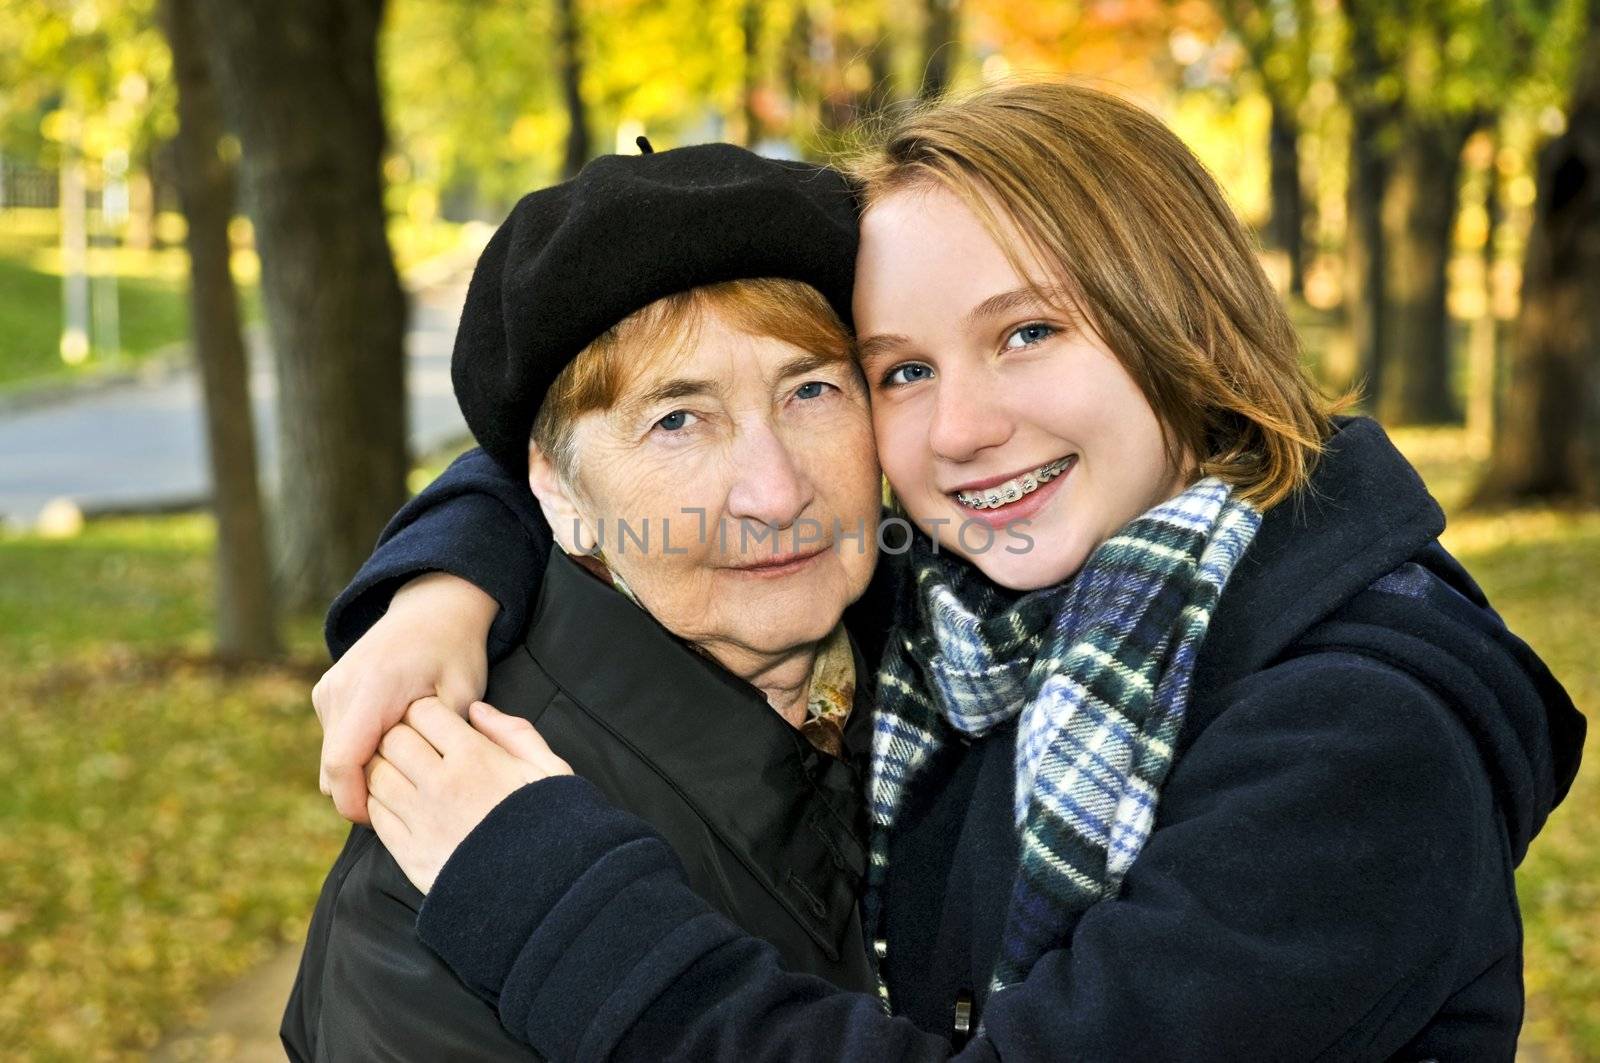 Teen granddaughter hugging grandmother in autumn park